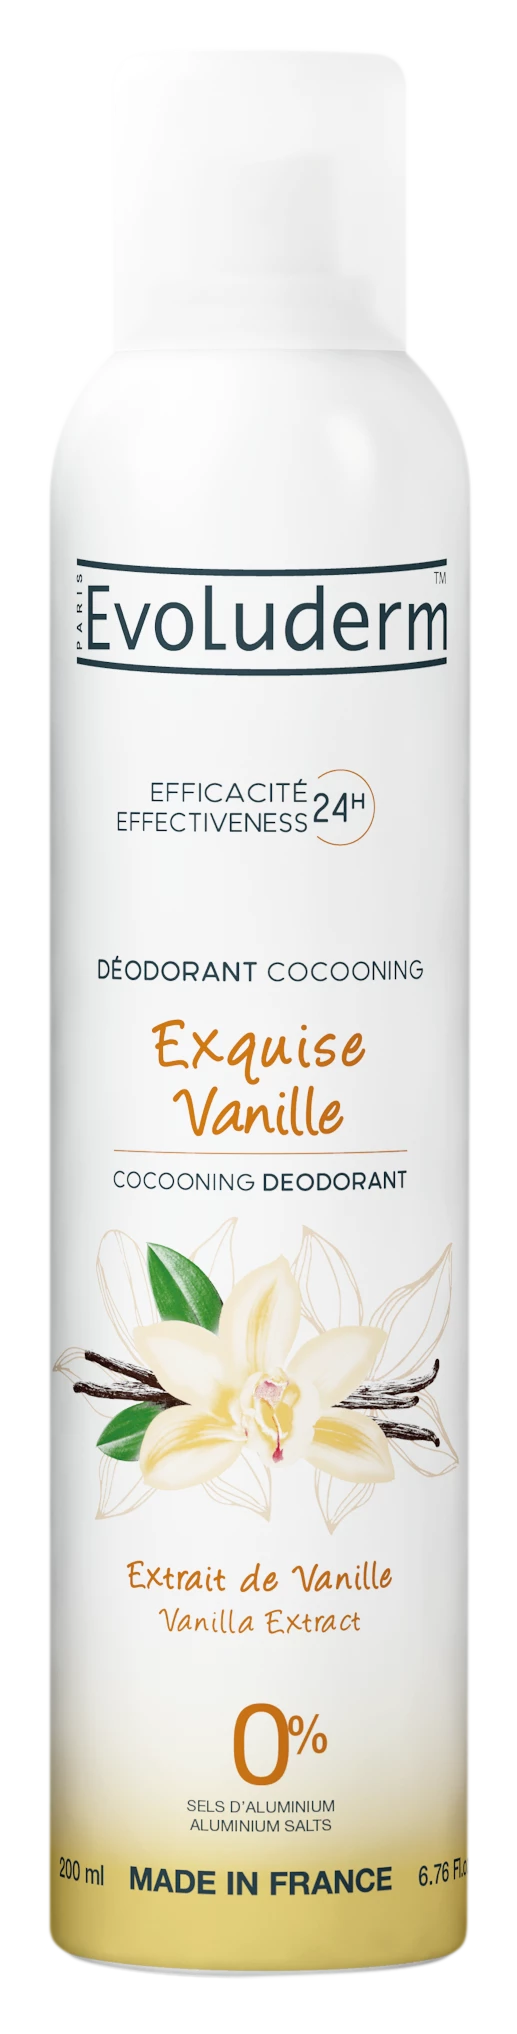 Exquisite Vanilla Deodorant Vanilla Extract, 200ml - EVOLUDERM